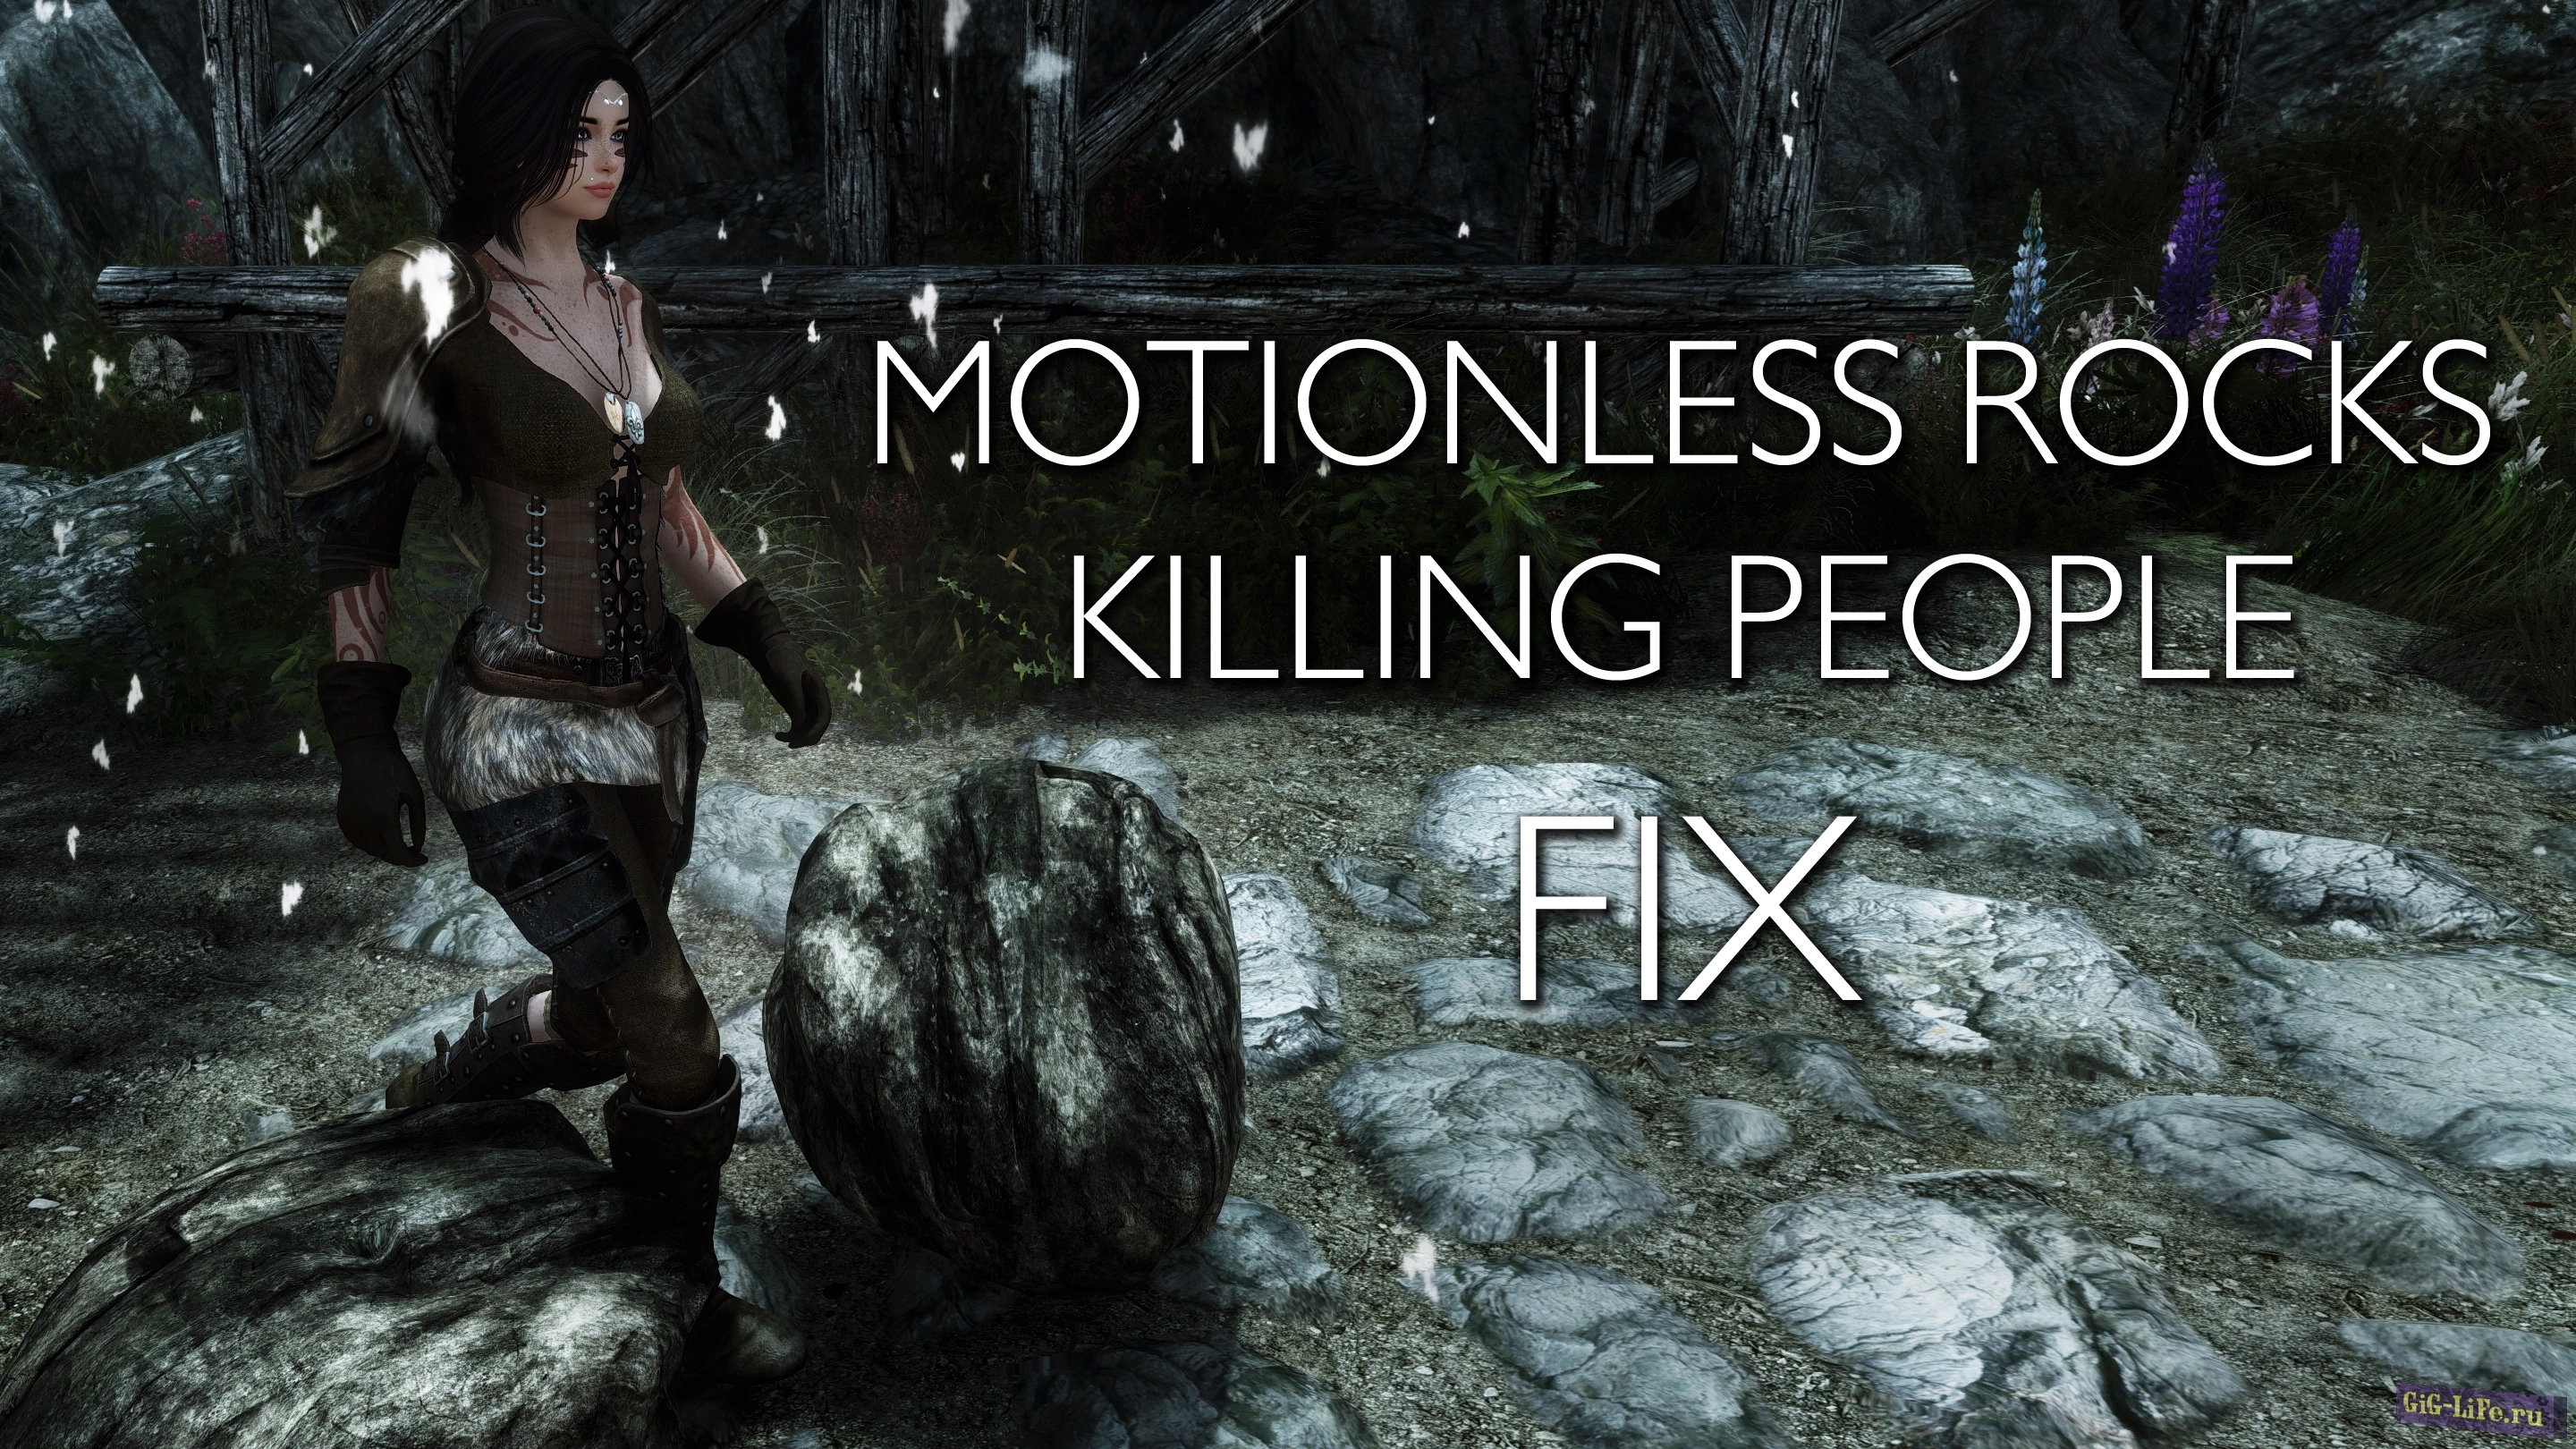 Skyrim — Фикс камней | Motionless Rocks Killing People Fix